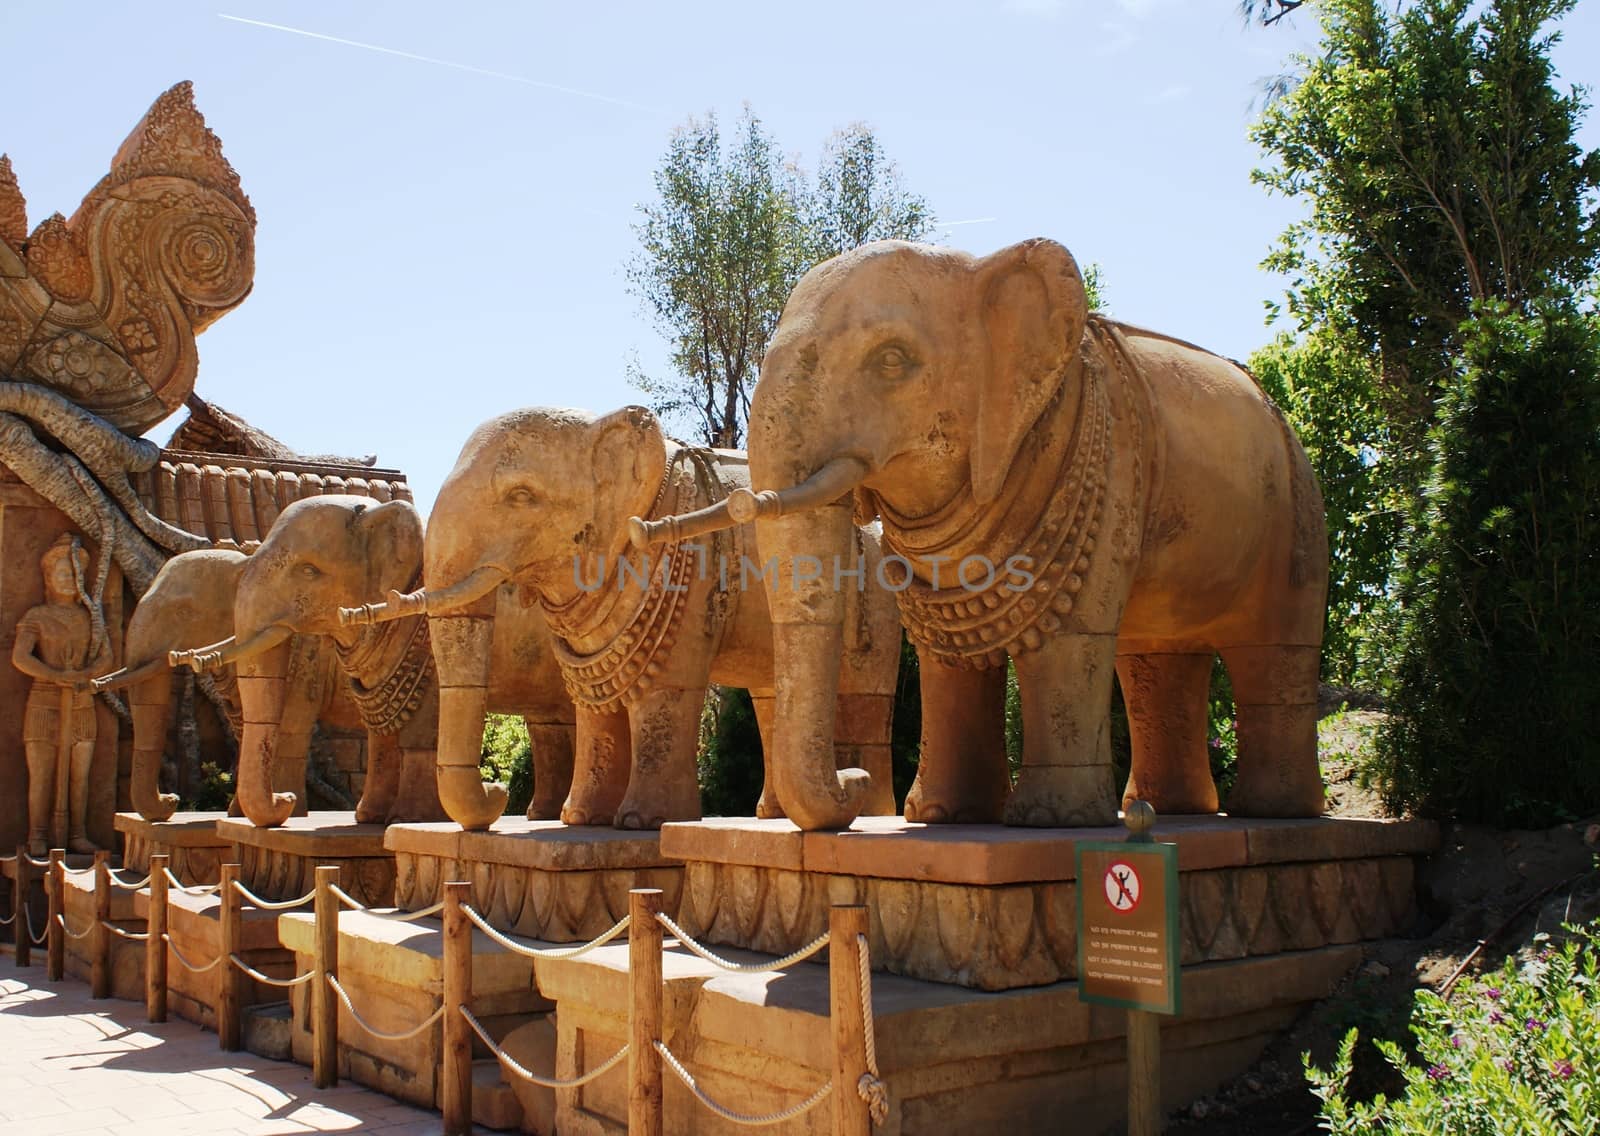 Stone elephants, sculptures in park Port Aventura